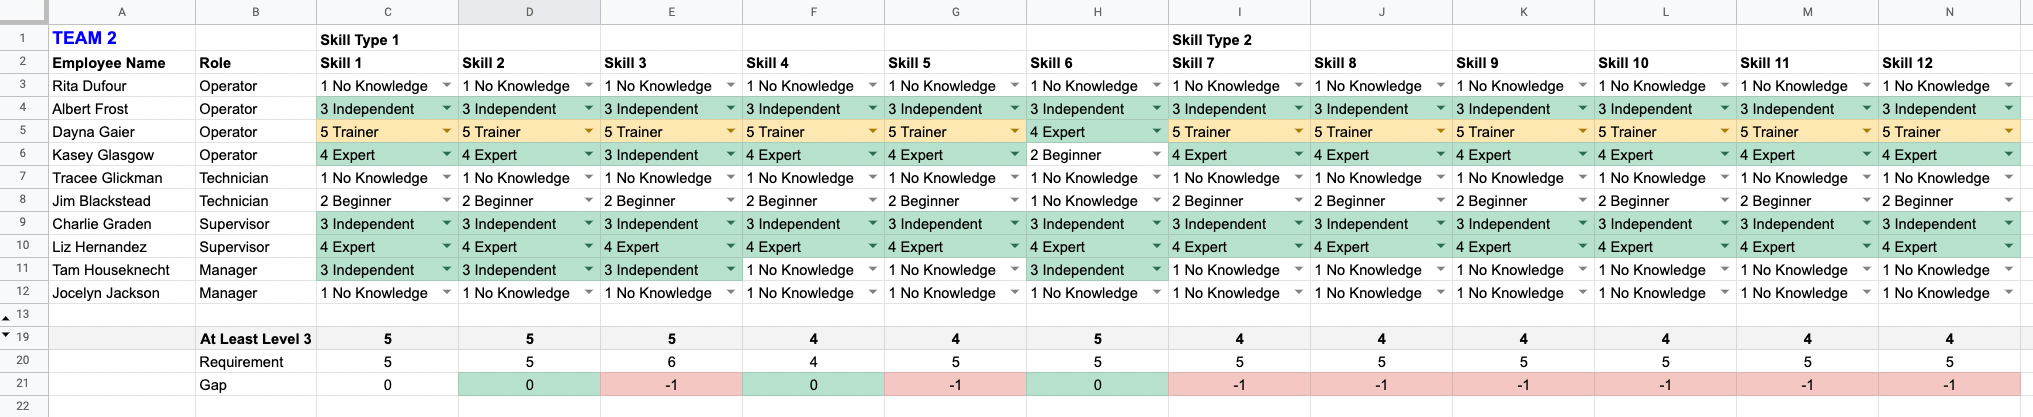 skills matrix spreadsheet-min